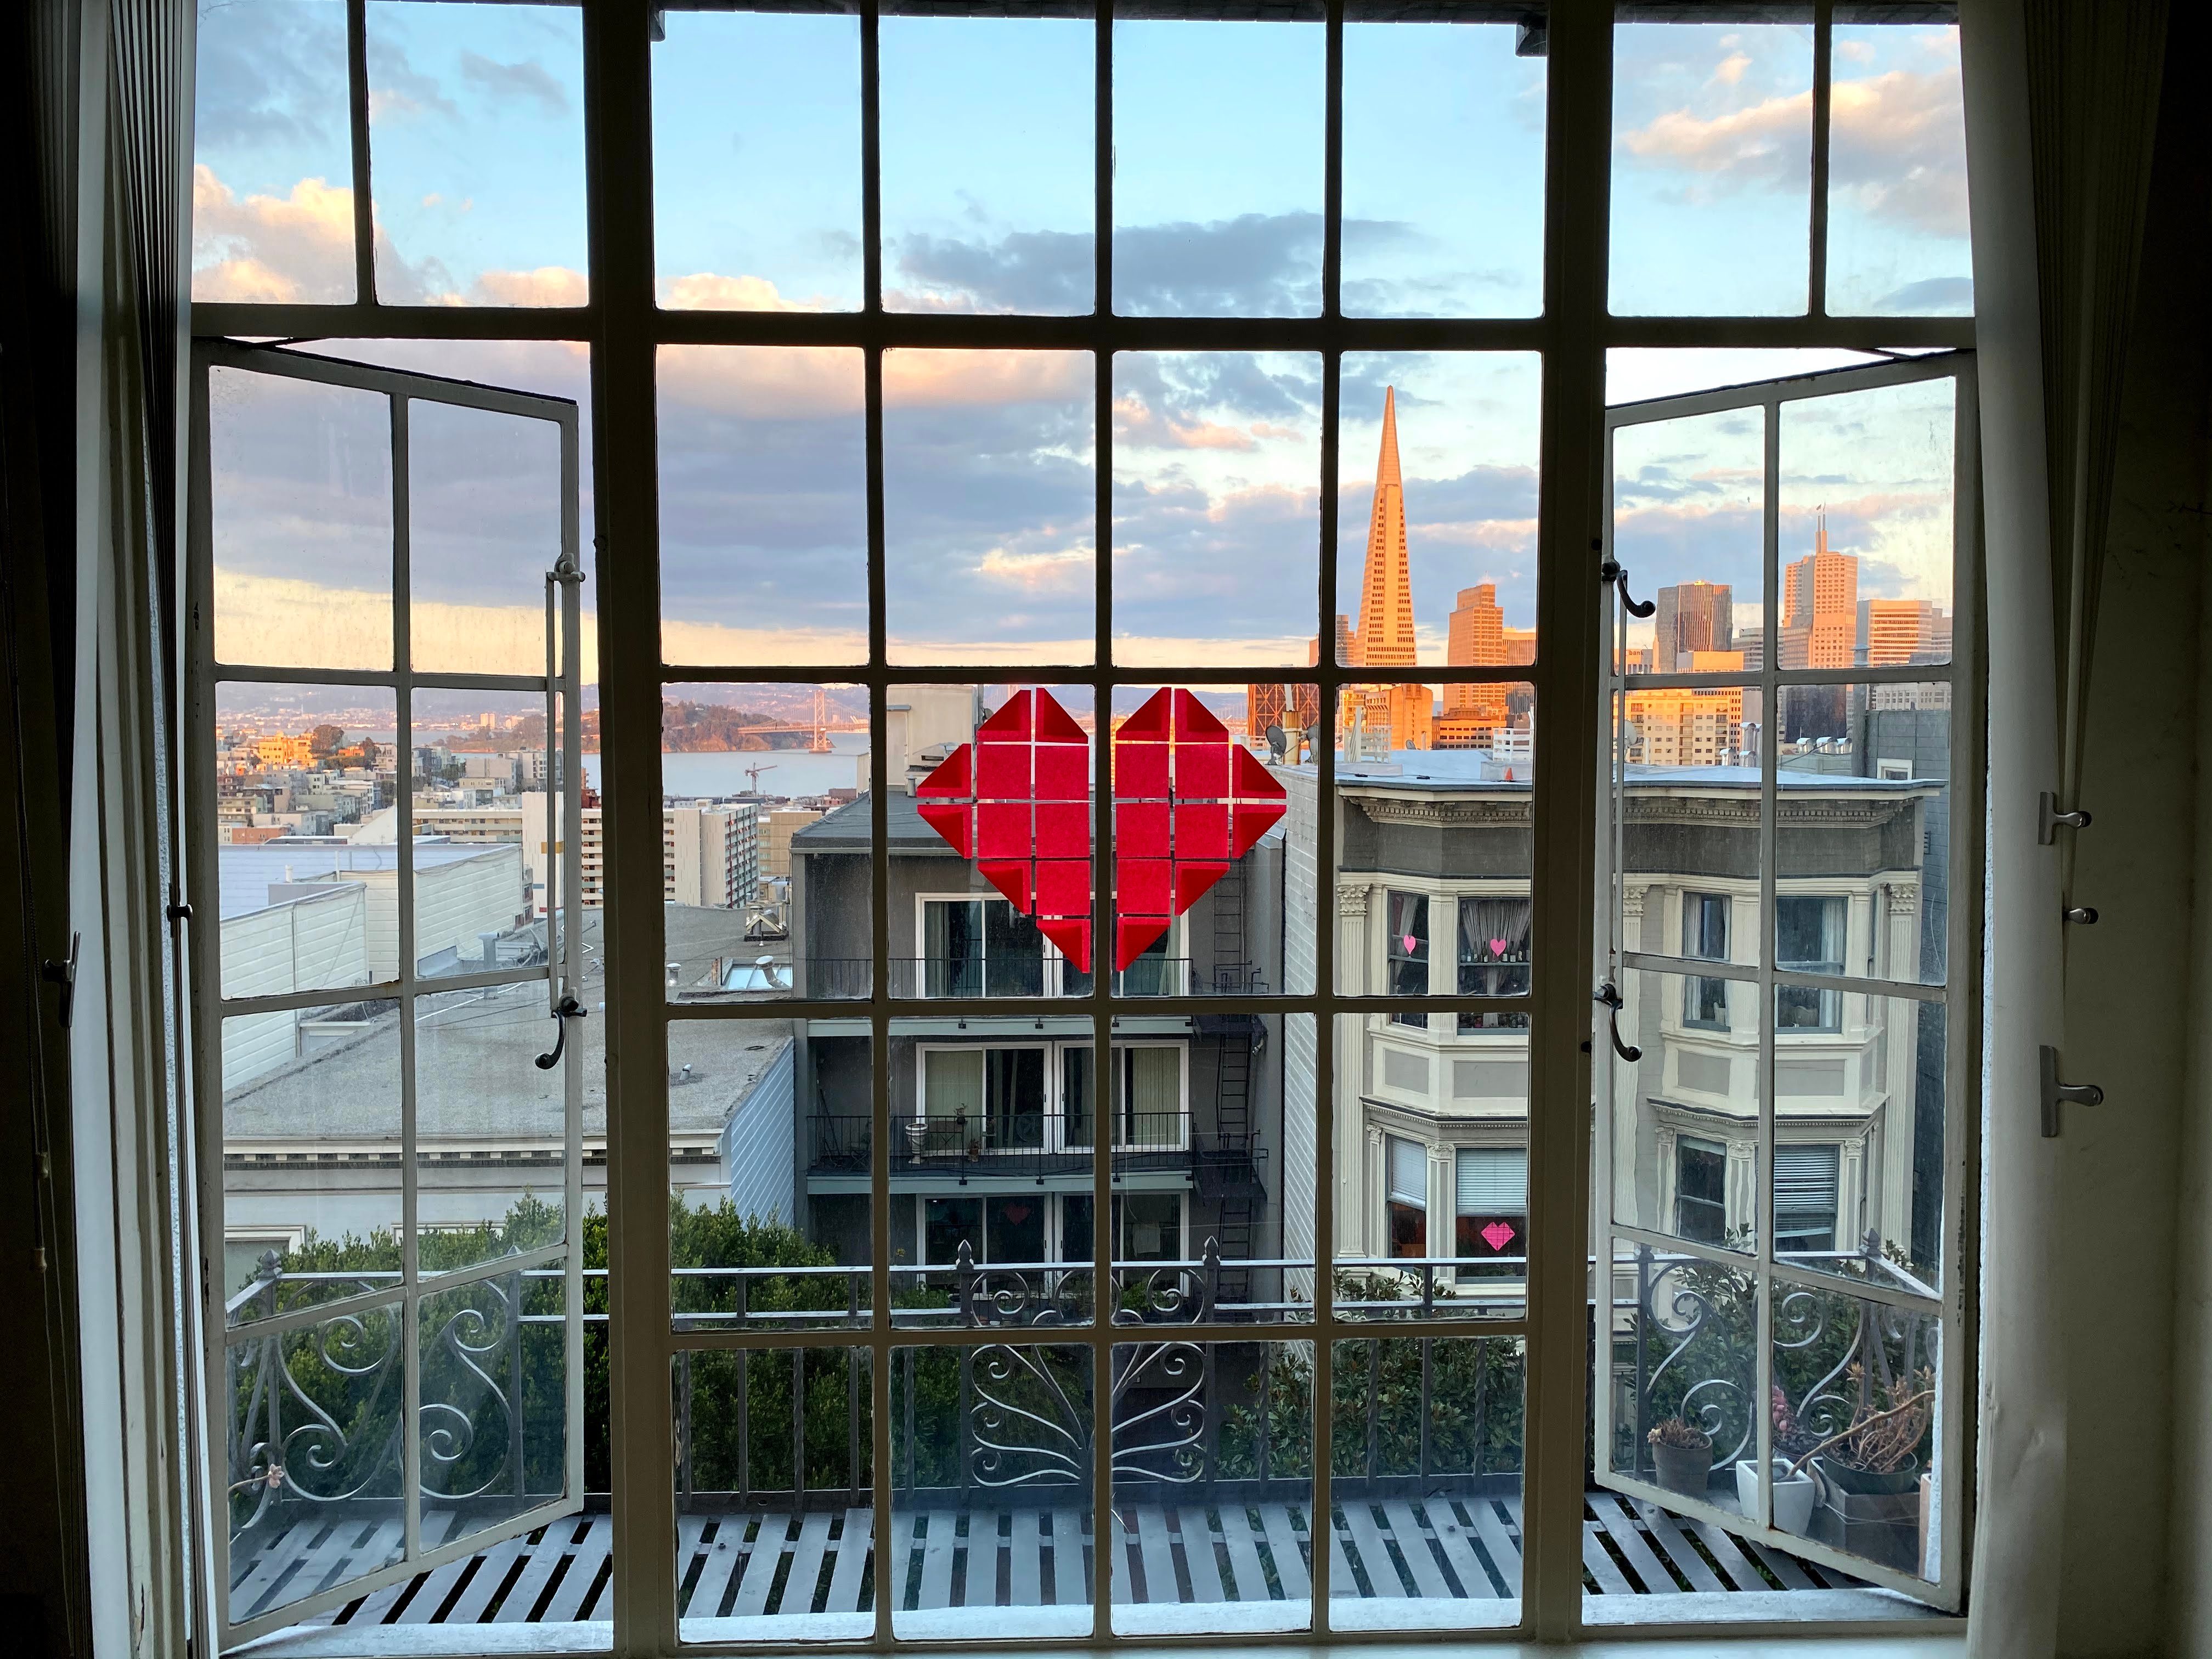 Hearts on window